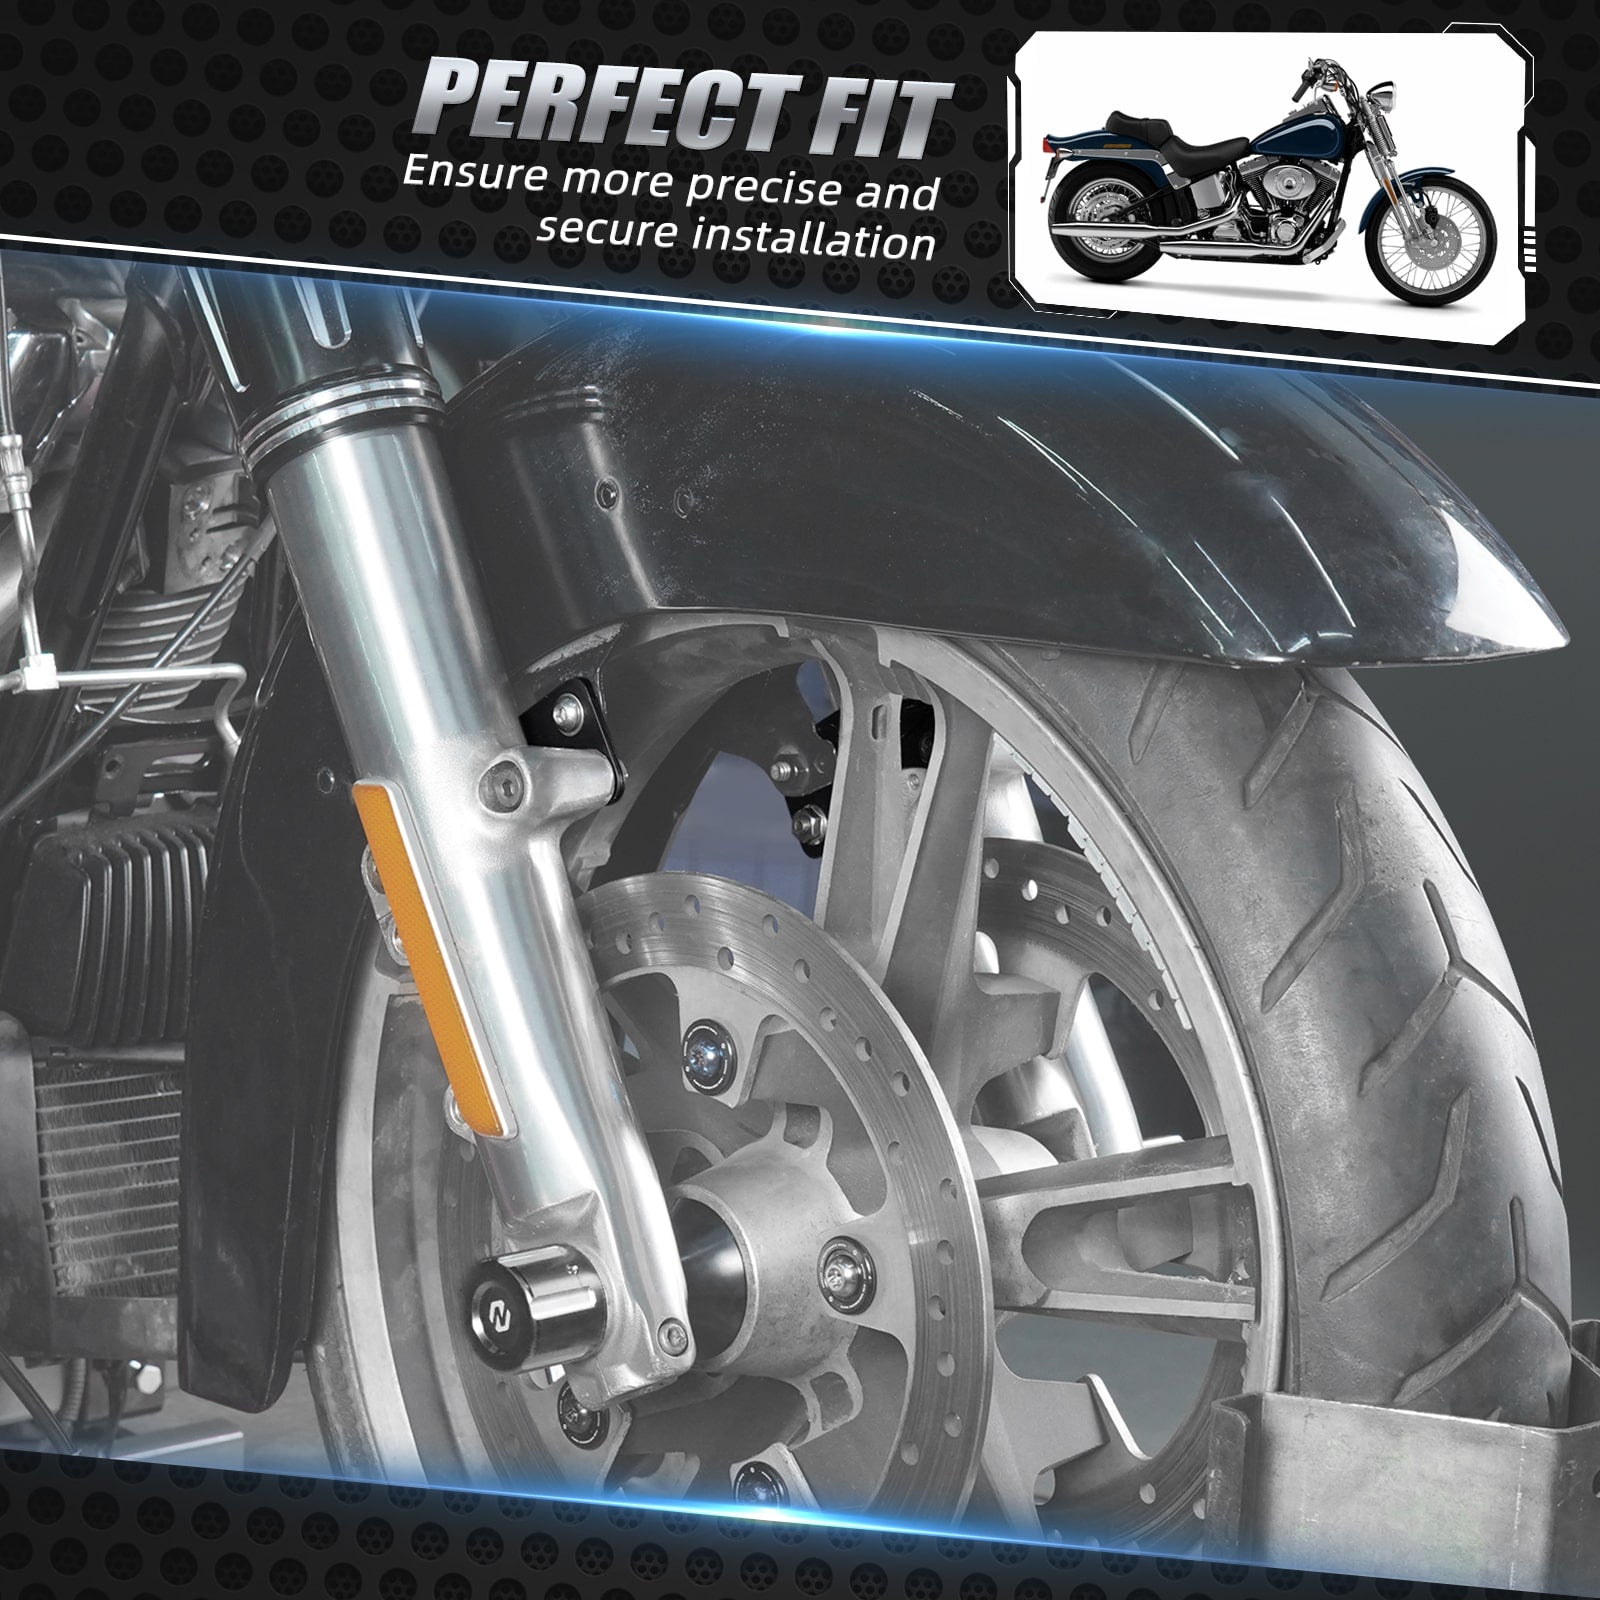 1 Pair 1" Front Fender Riser Lift Bracket For Harley Davidson Touring Model with 21" front wheel